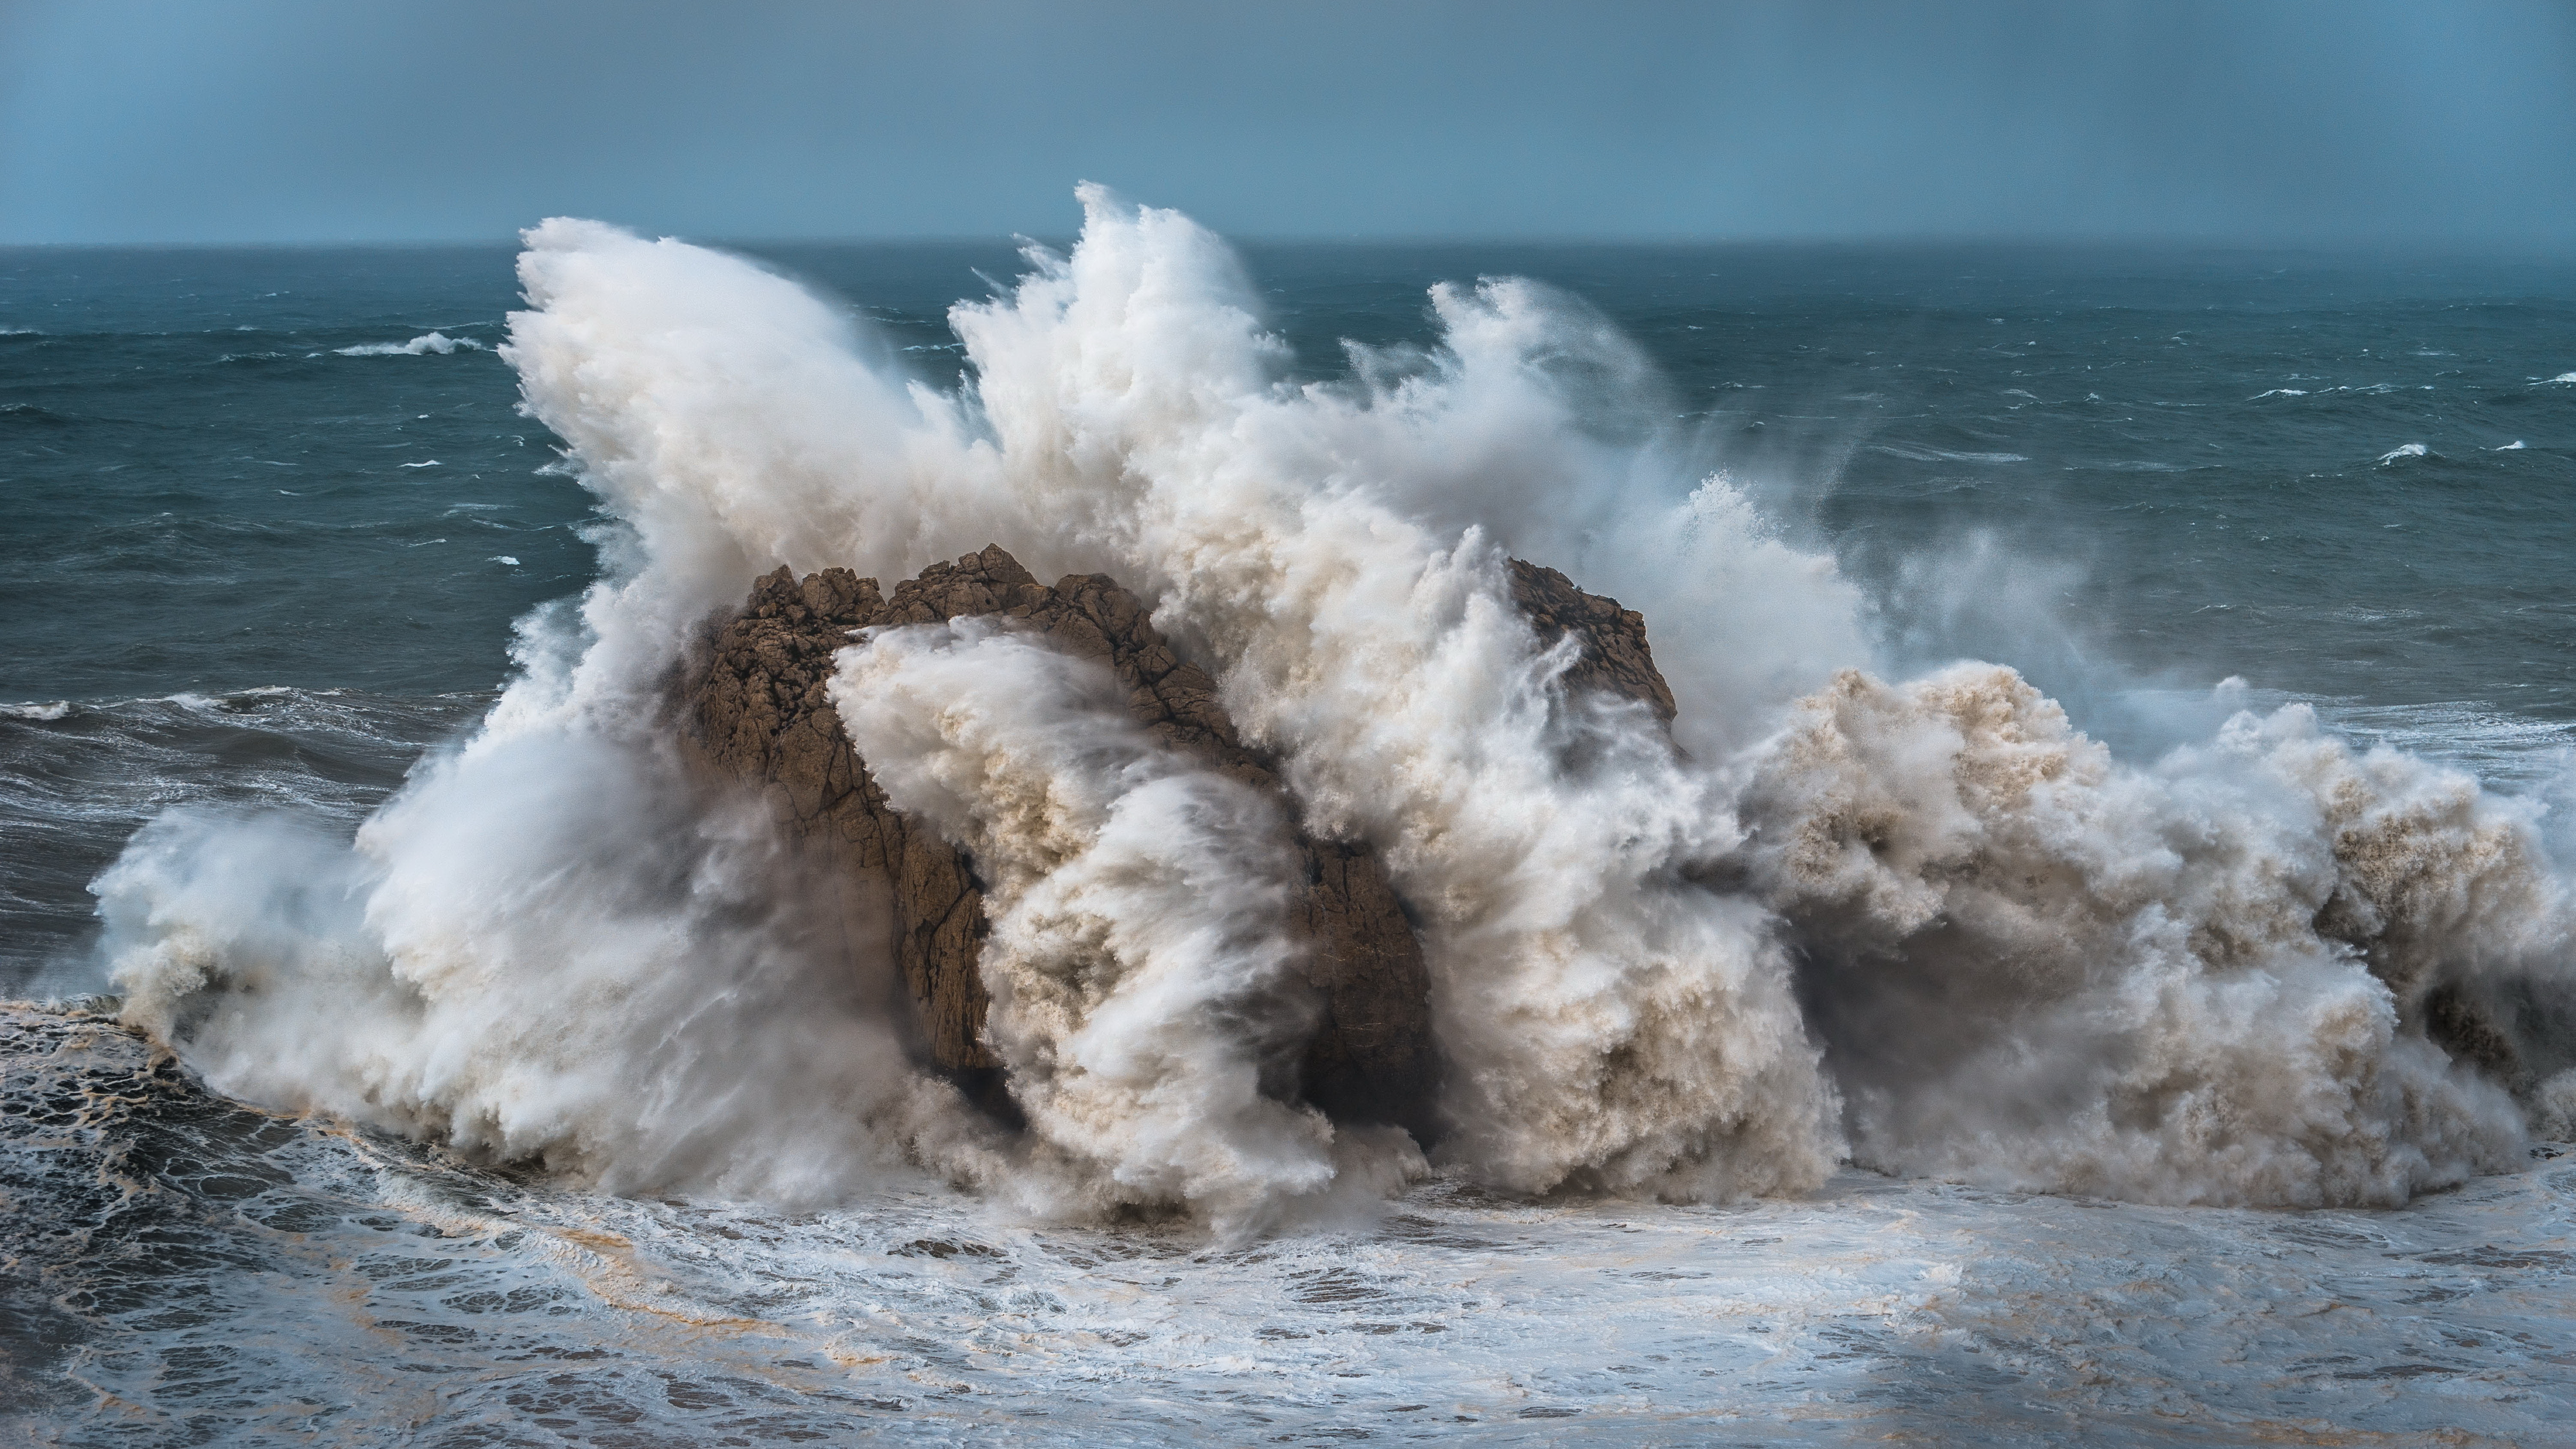 Природа шторма. Атлантический океан шторм. Океан волны шторм. Море шторм. Морская буря.